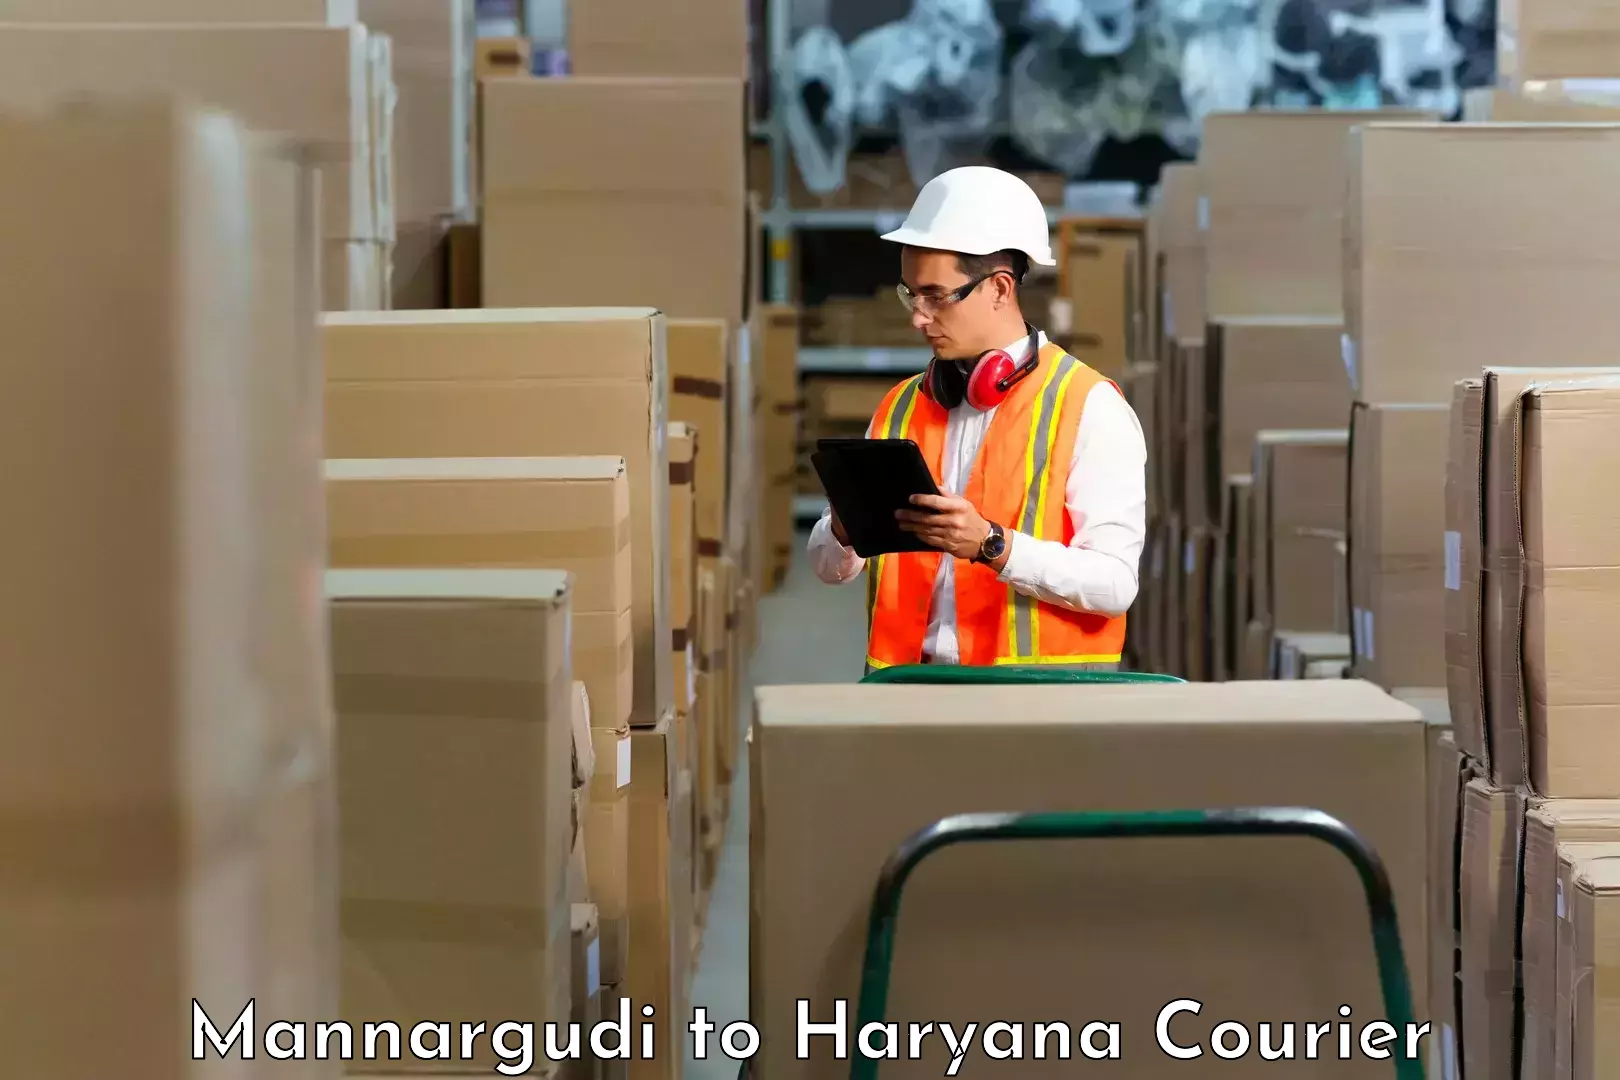 International courier networks Mannargudi to Hansi